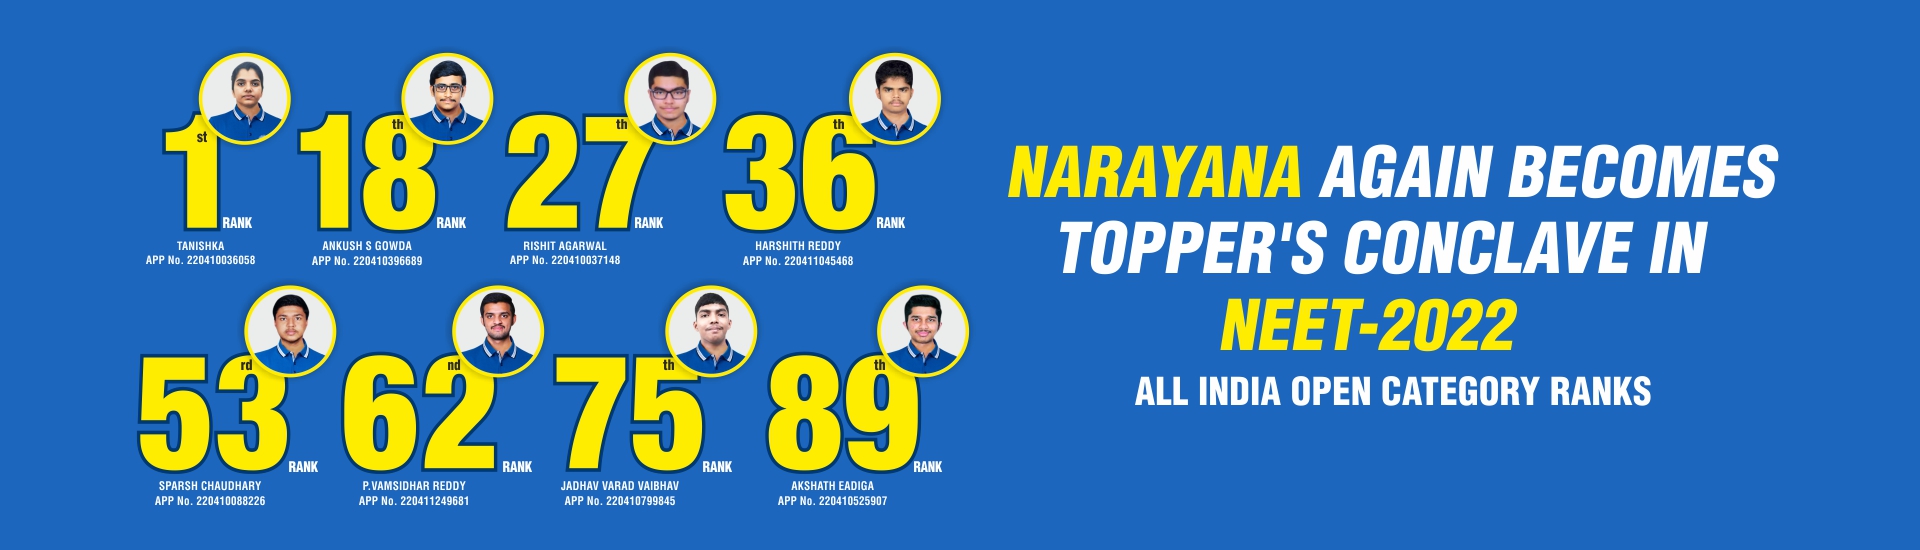 narayana-neet-2022-ranks